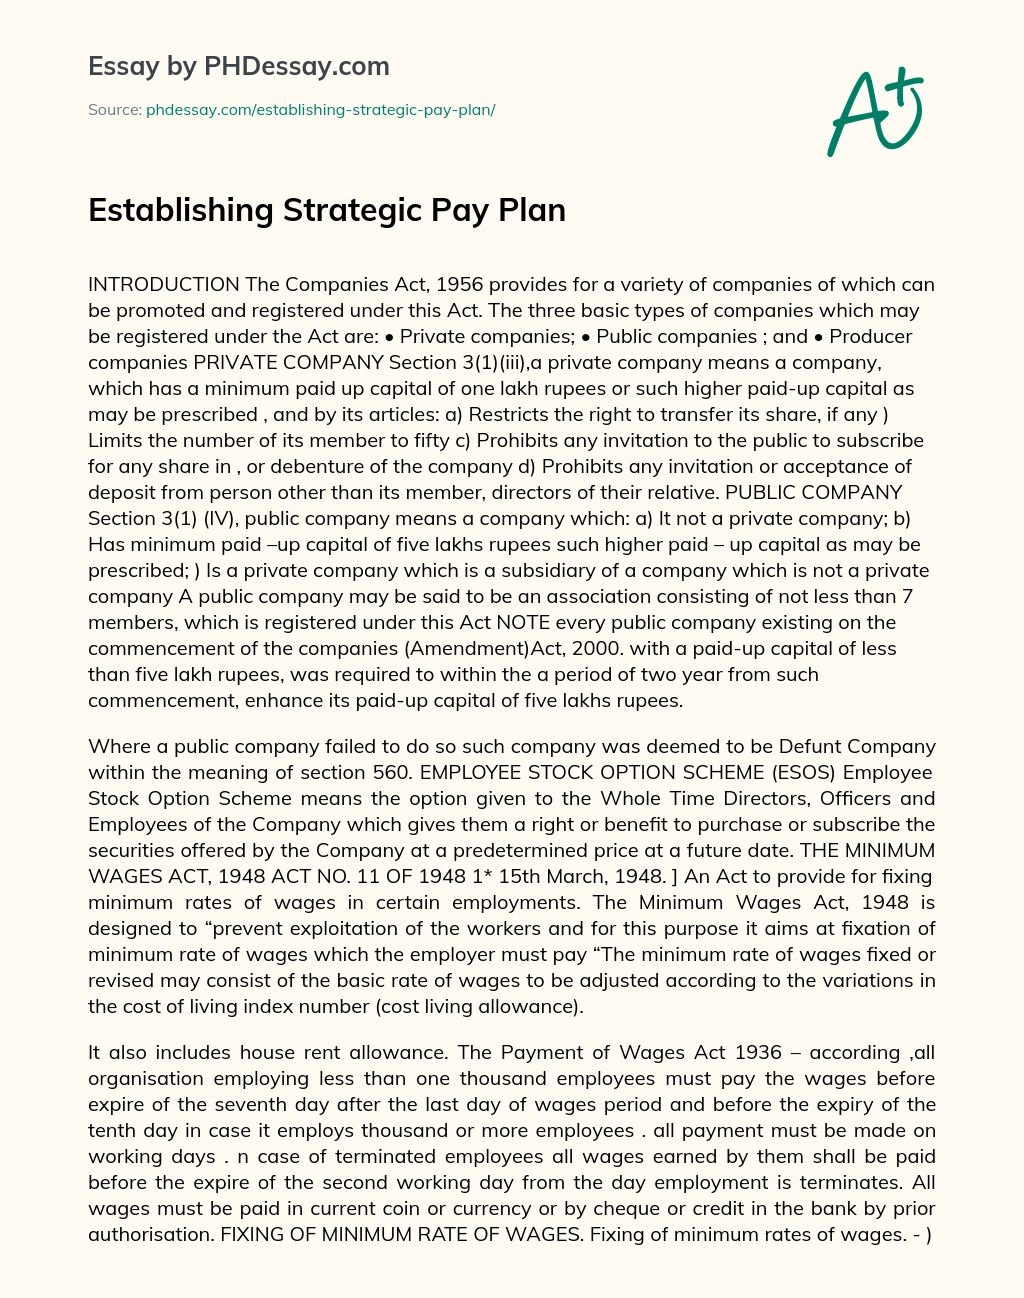 Establishing Strategic Pay Plan essay